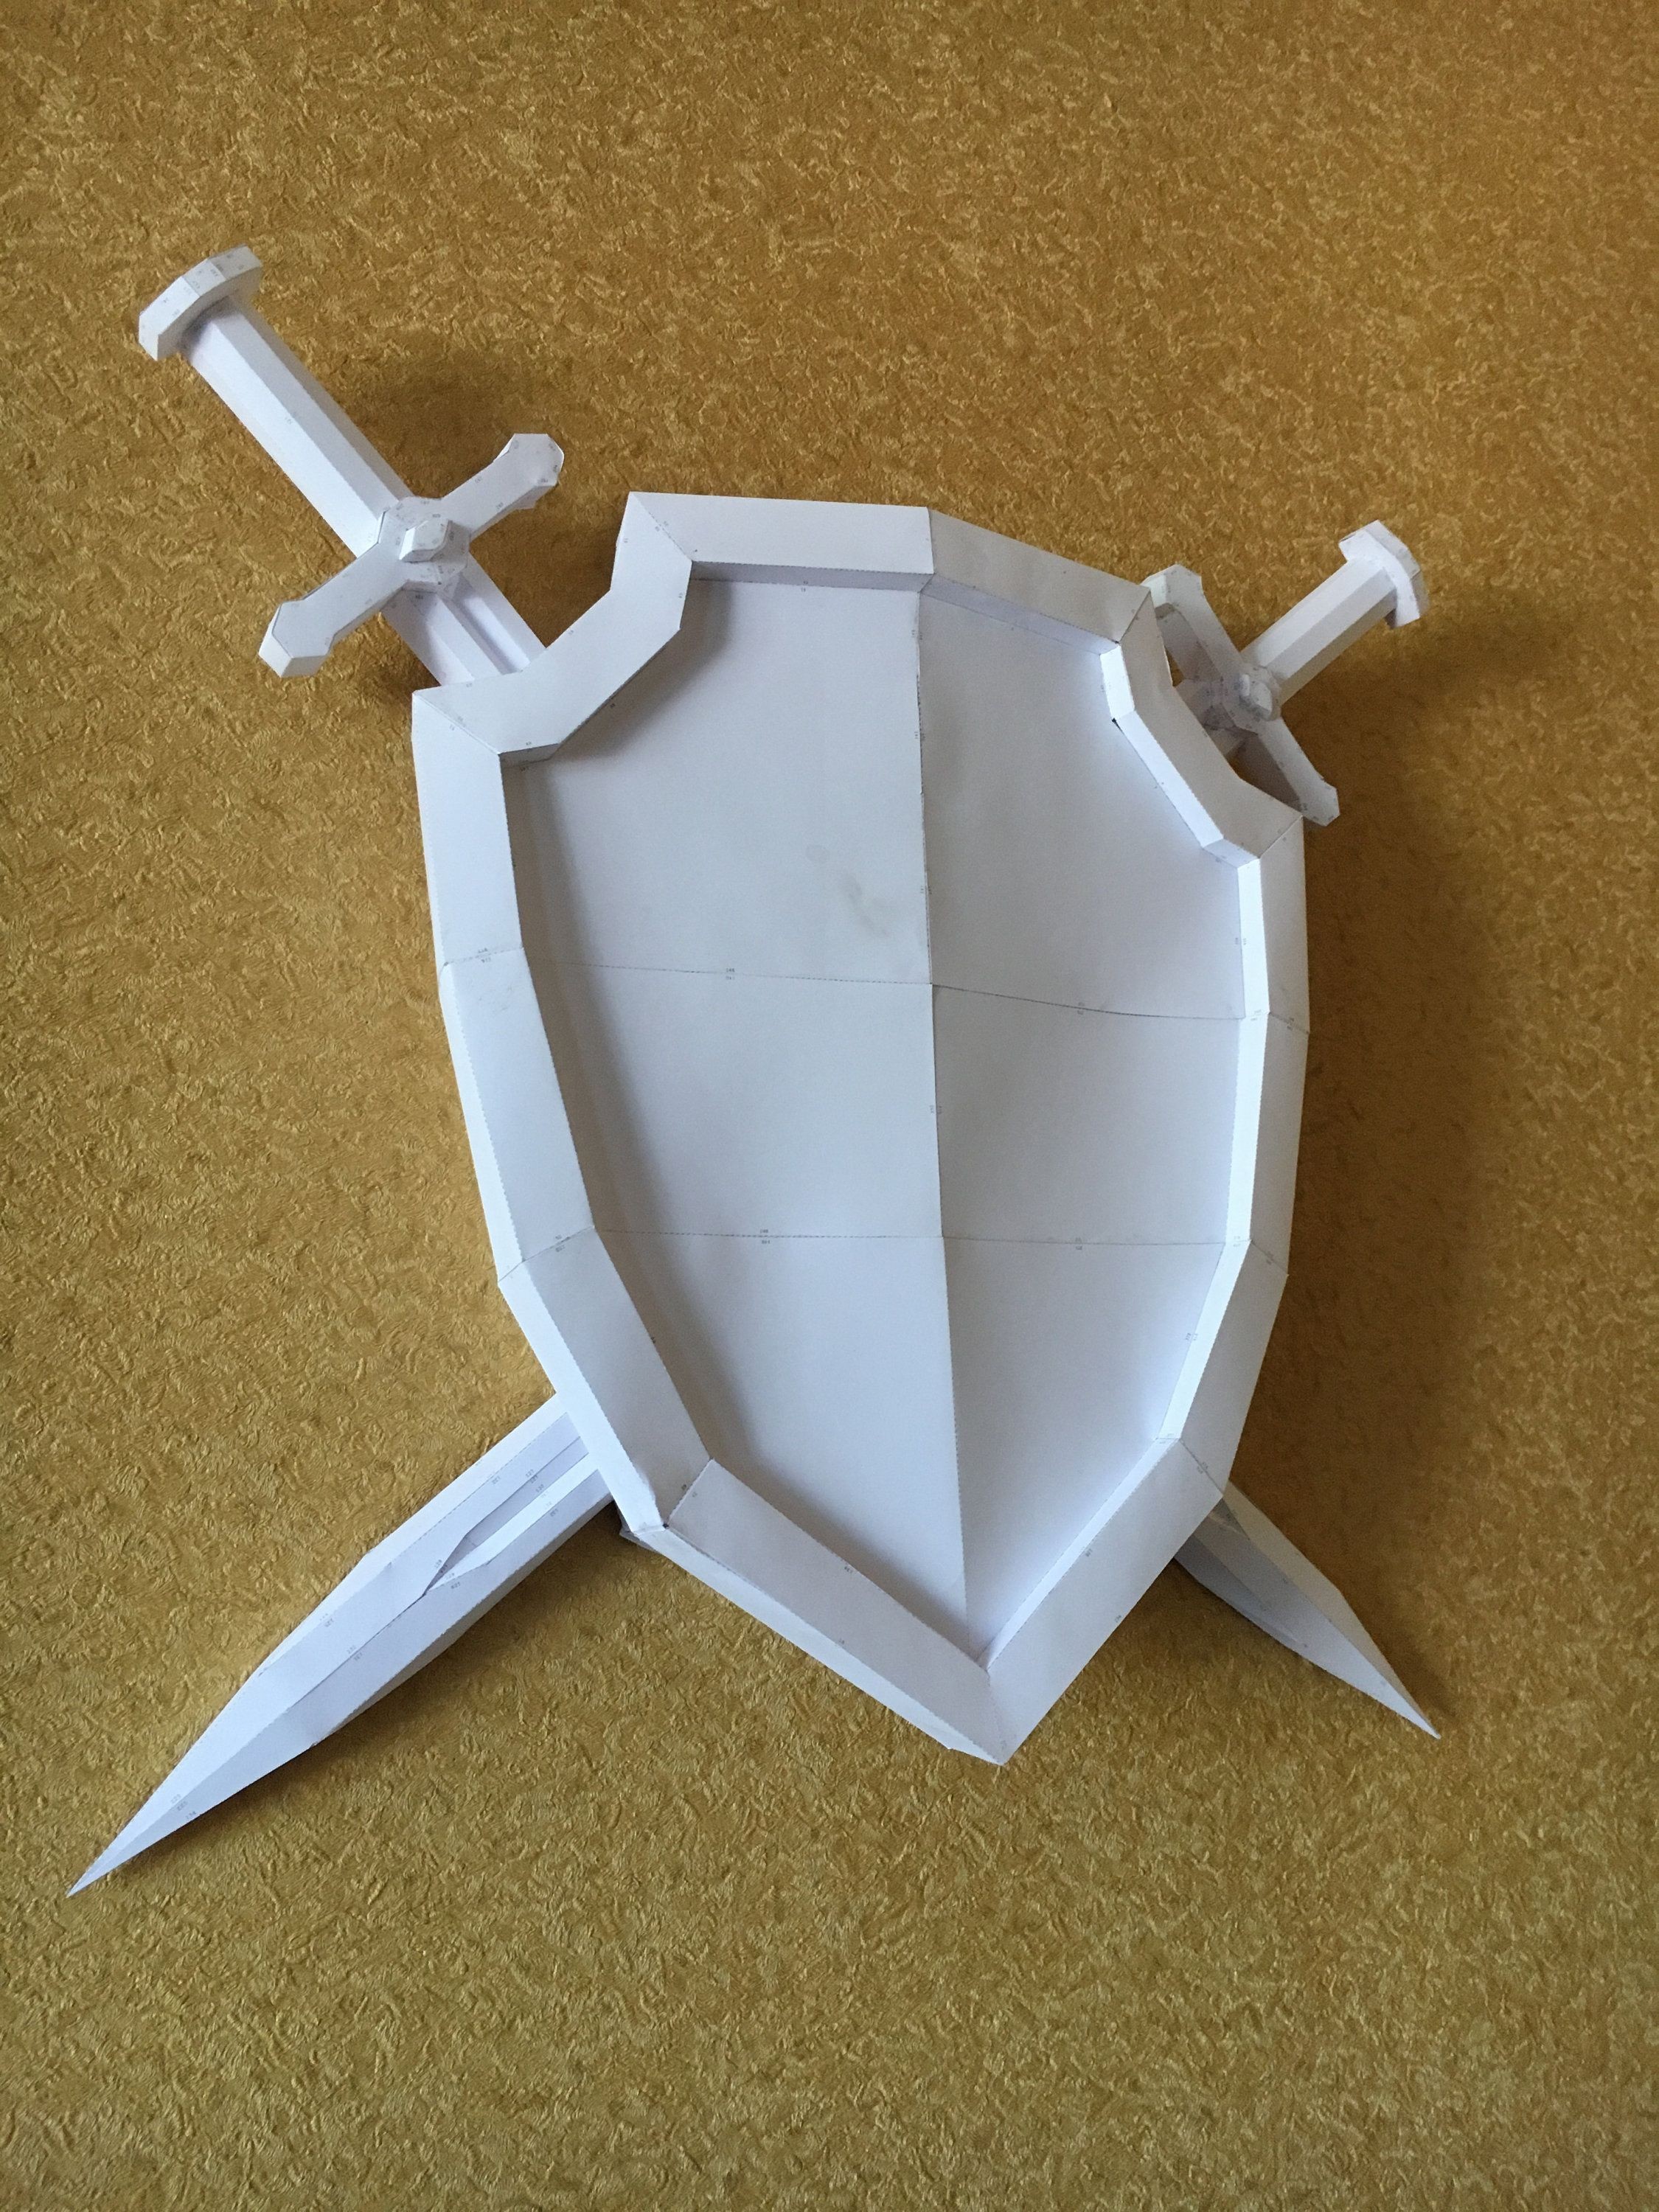 Papercraft Helmets Sword Shield Diy Papercraft Model ÐÑÐ¼Ð°Ð¶Ð½ÑÐµ Ð¸Ð·Ð´ÐµÐ Ð¸Ñ